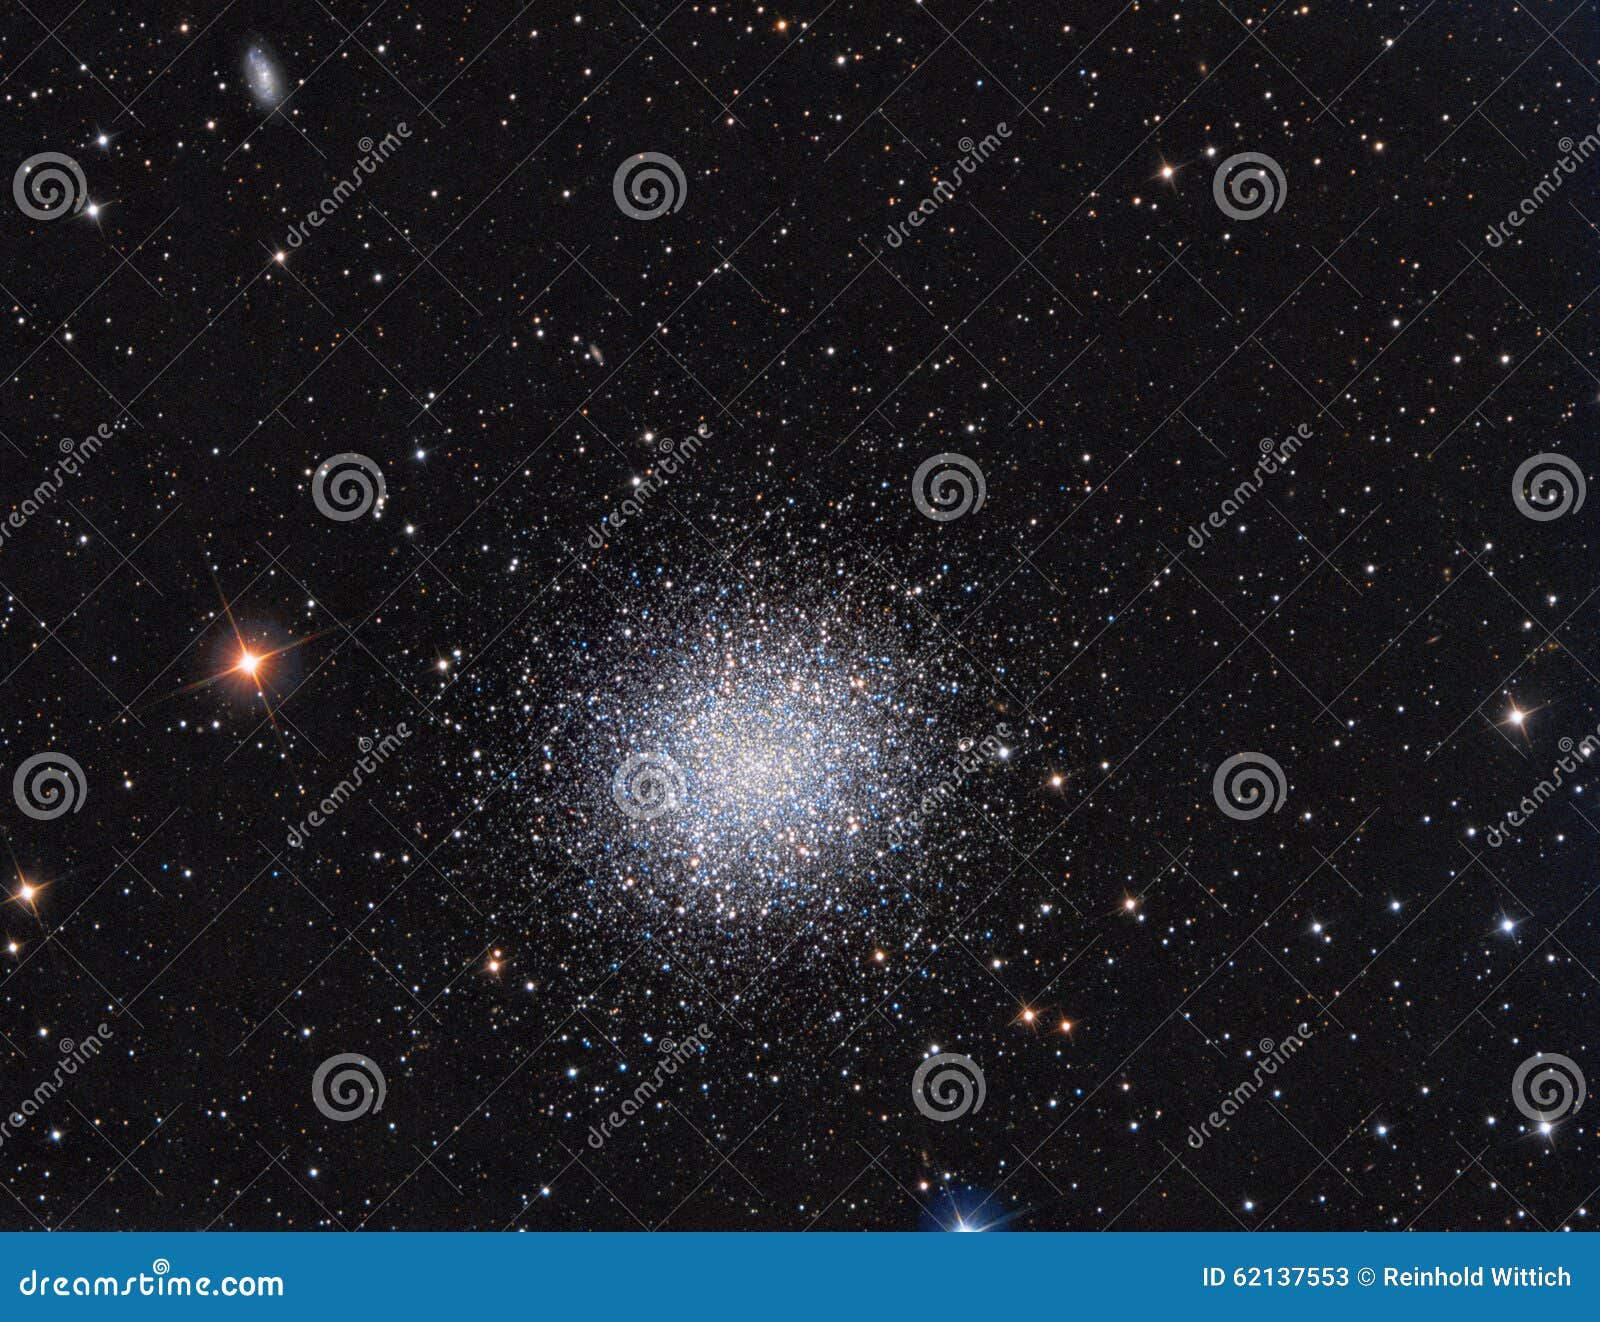 m13 globular cluster in constellation hercules